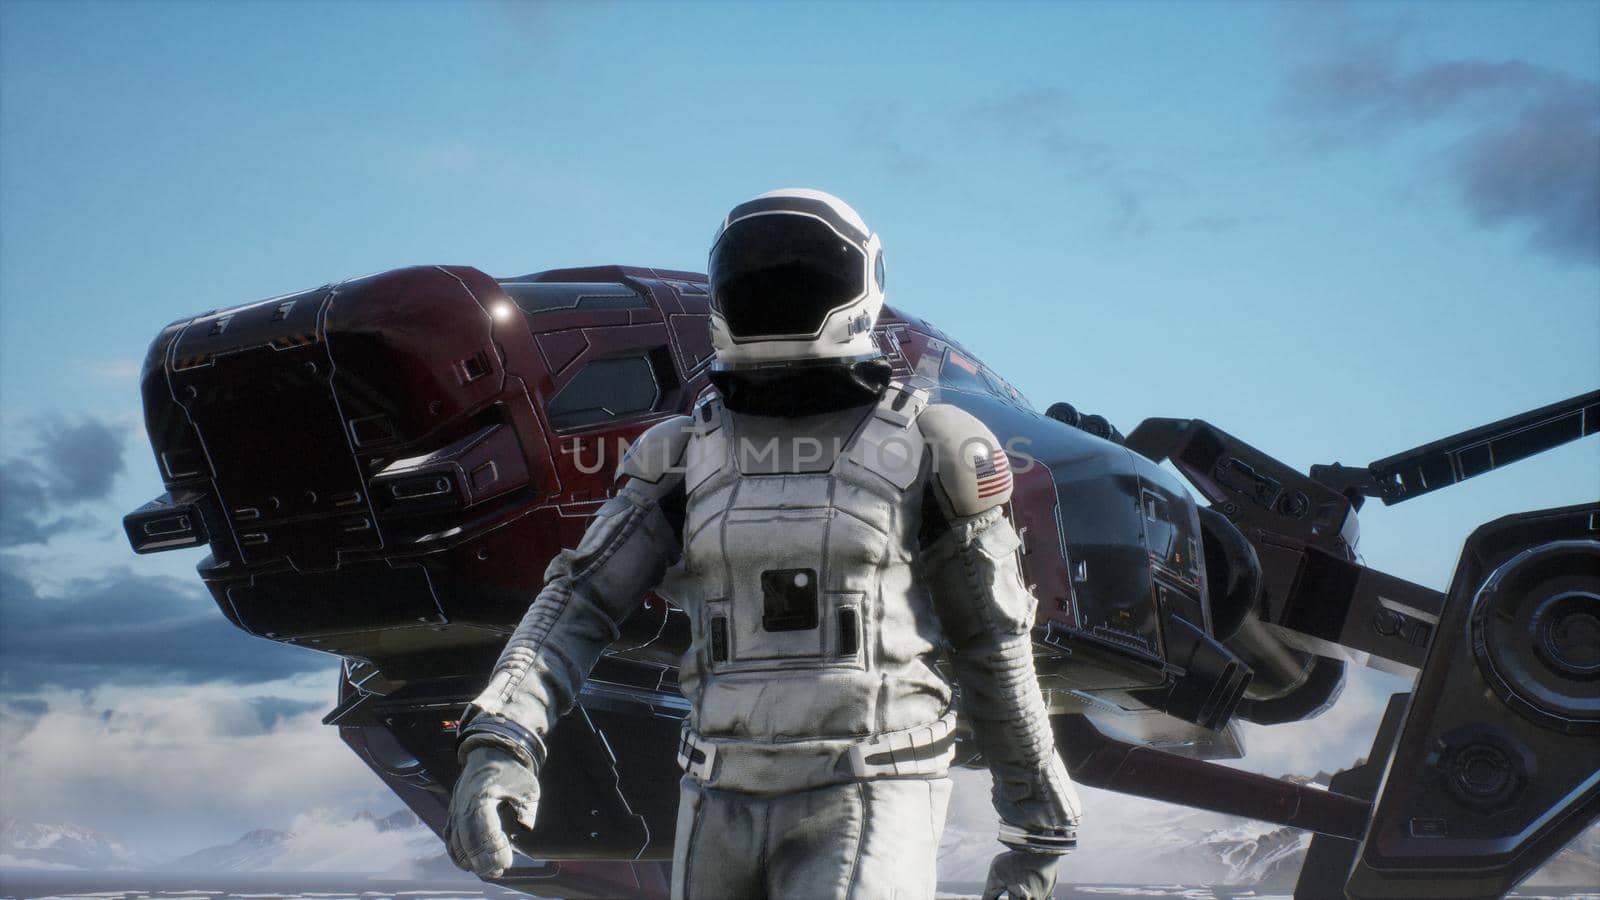 An astronaut-explorer is walking on an uninhabited planet.